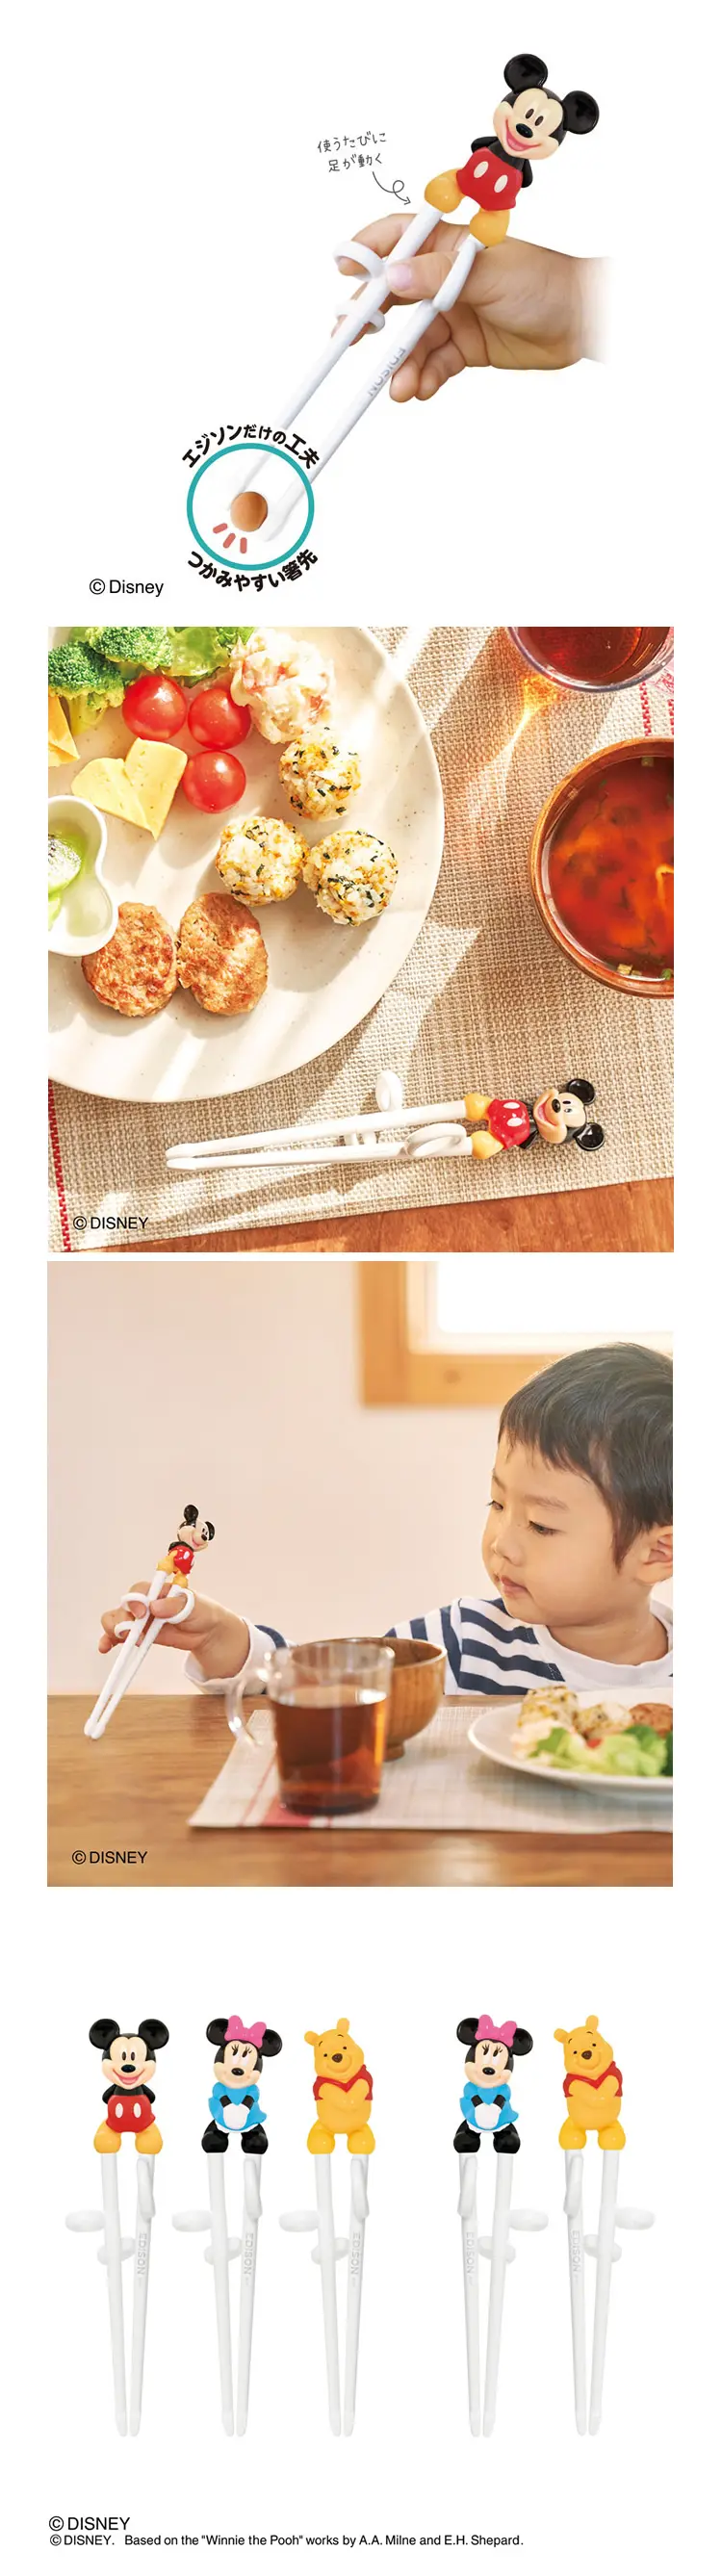 Edison 学习筷子(右手用)-米妮